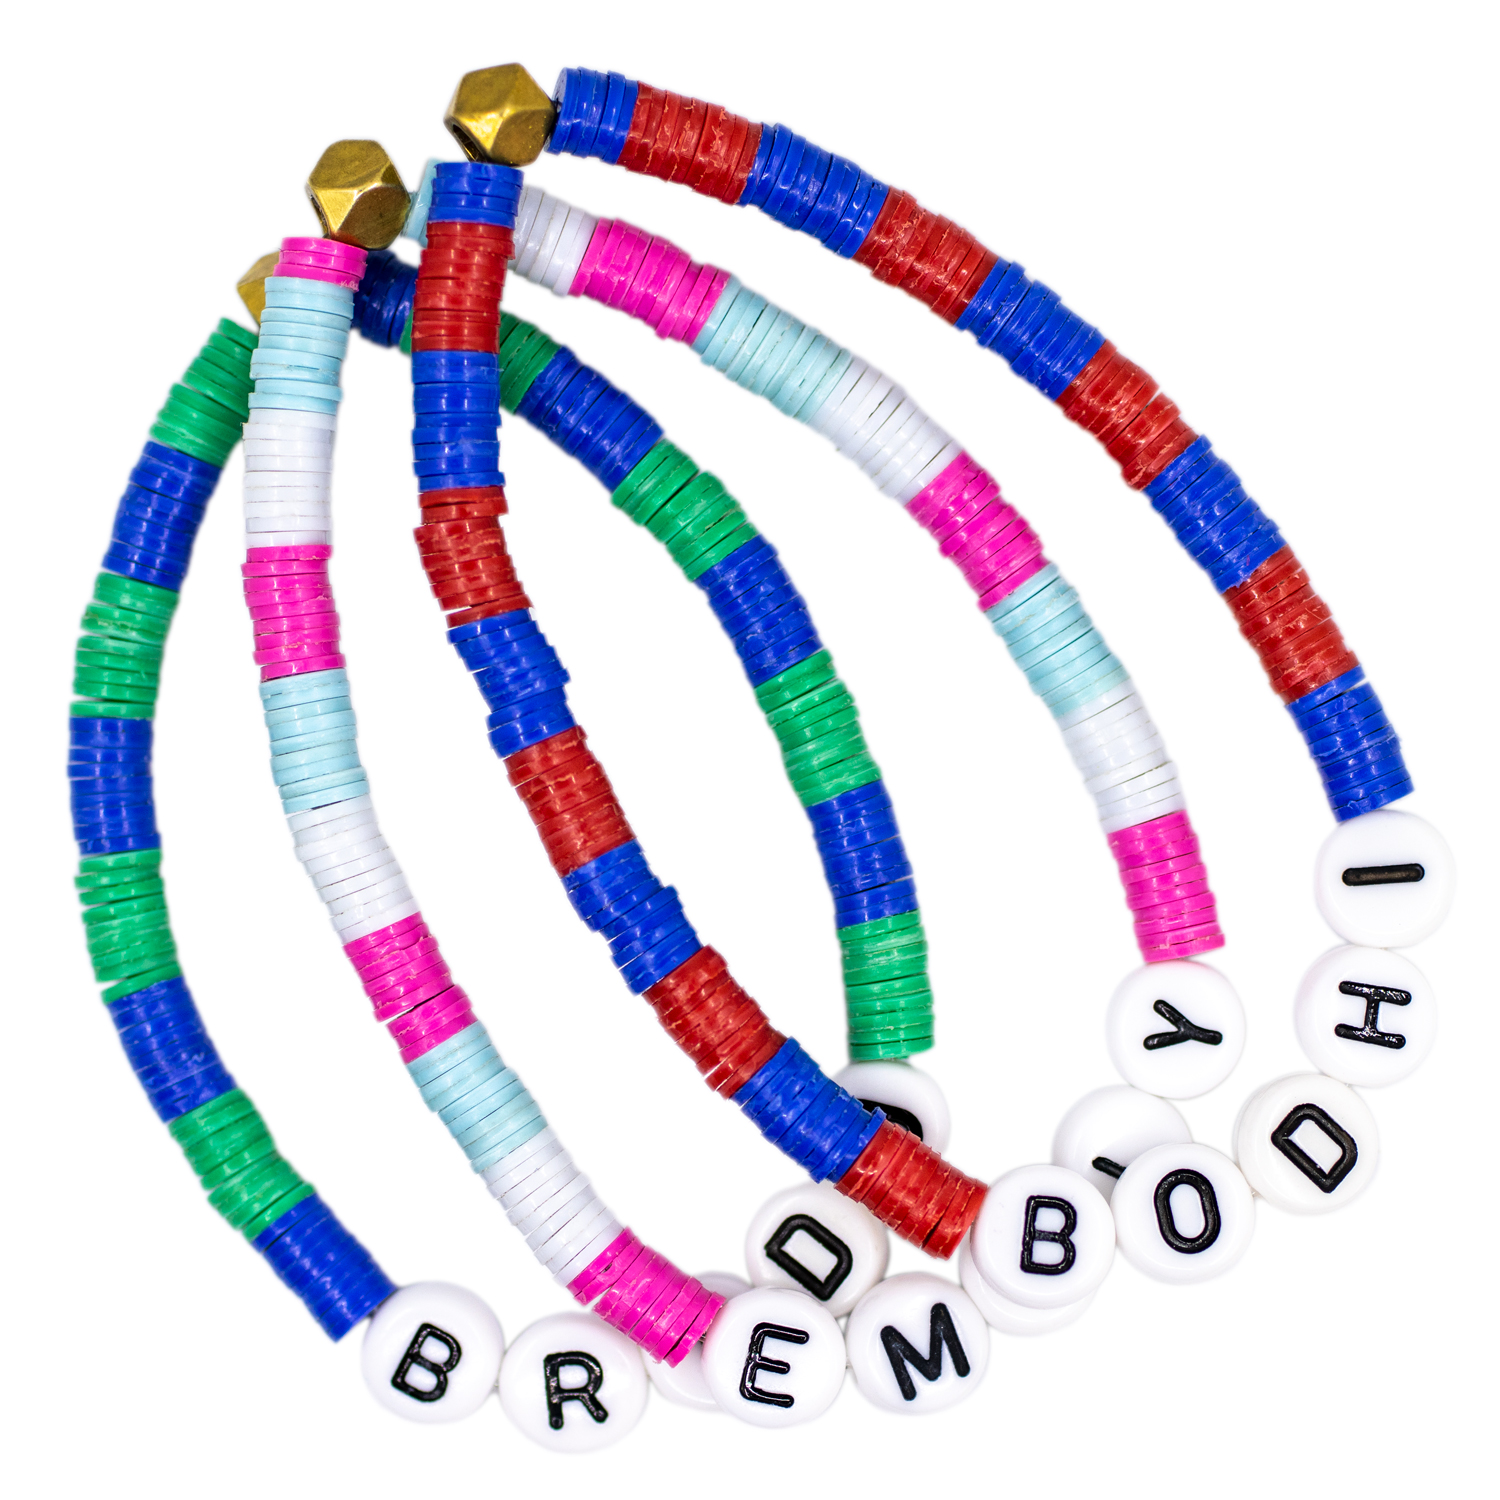 Buy Kids Rubber Band Bracelets Online in India - Etsy